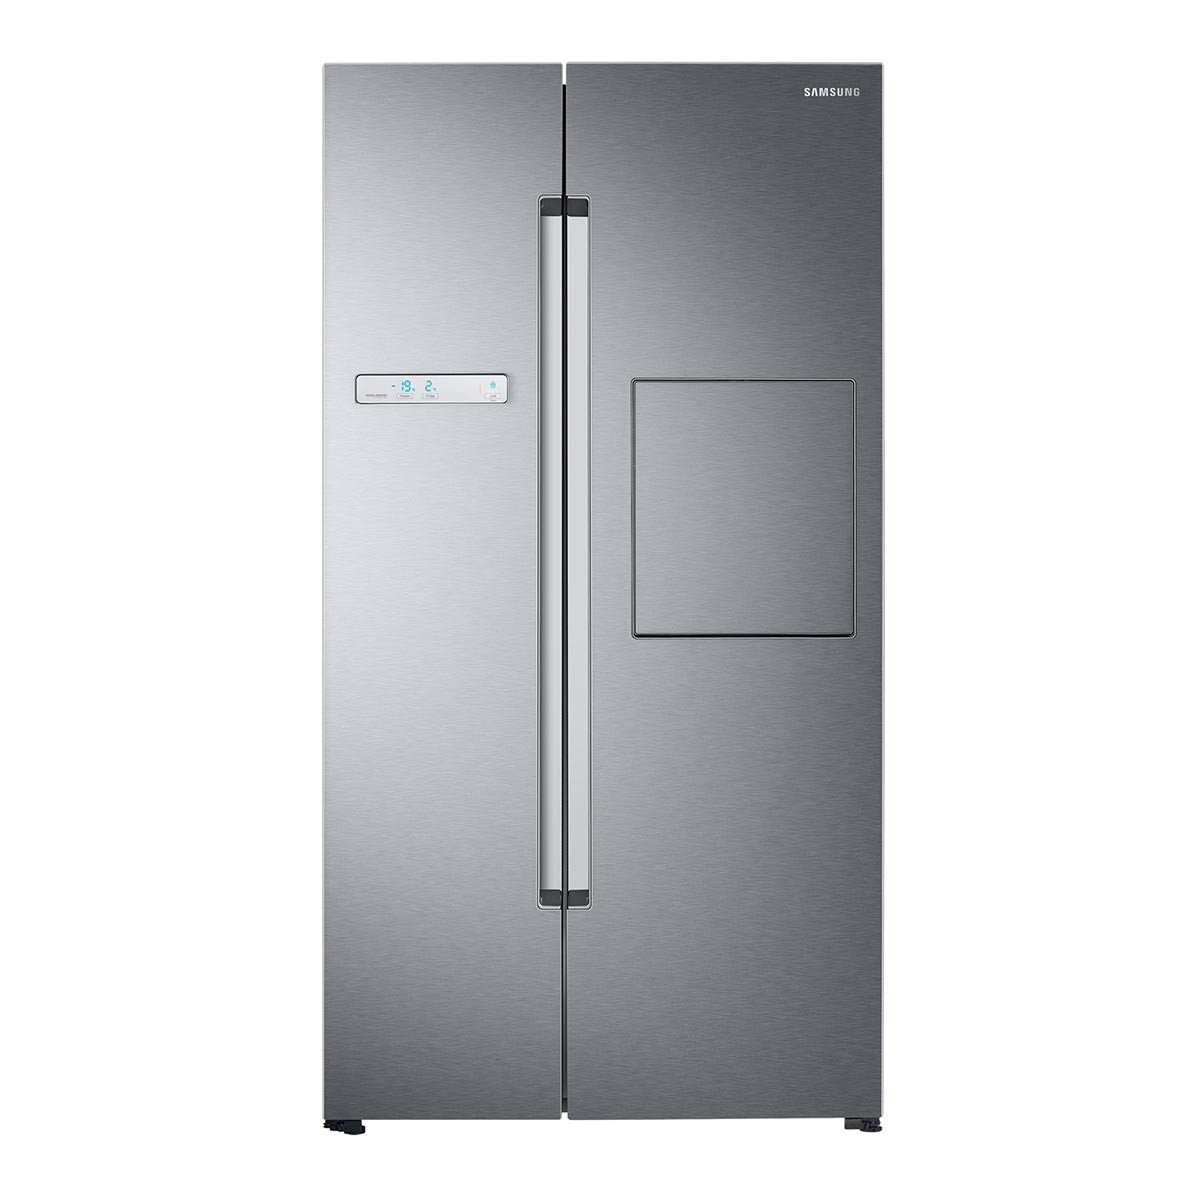 Samsung Homebar 對開冰箱 795公升 RS82A6000SL/TW